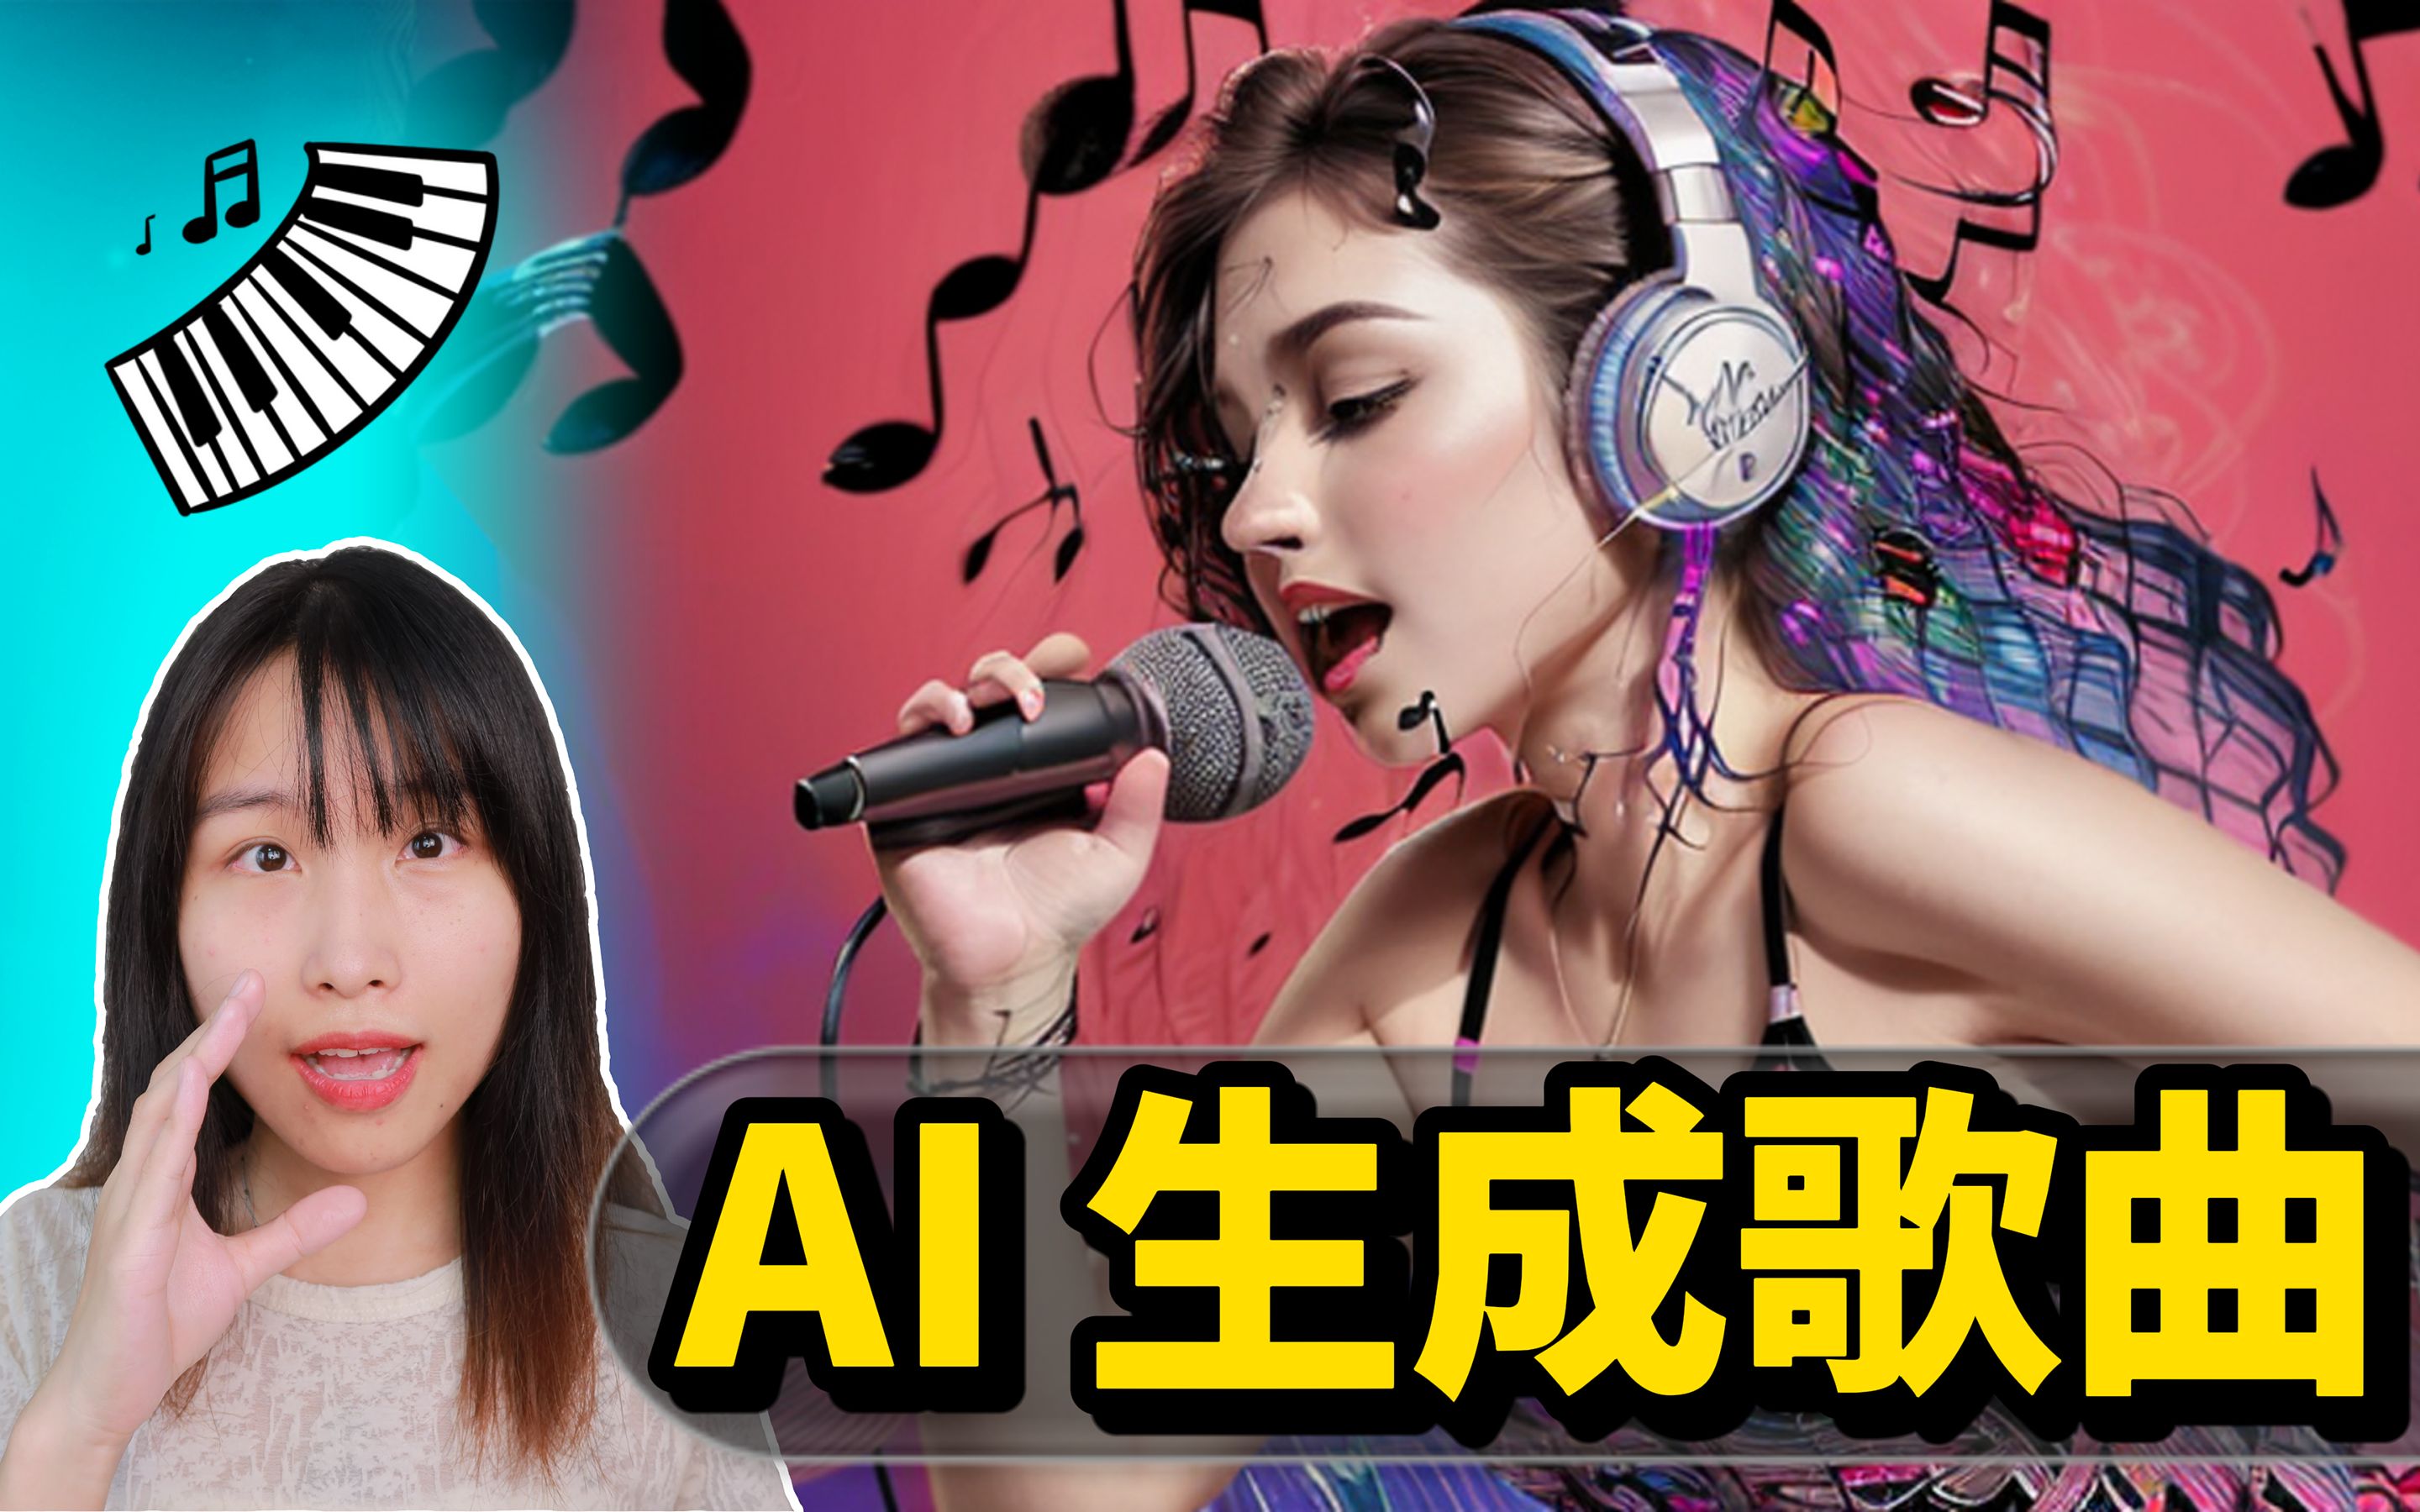 【AI音乐】音乐人失业！5分钟免费生成歌曲，作曲+填词+自唱！用AI音乐赚钱，从零基础变成创作歌手！